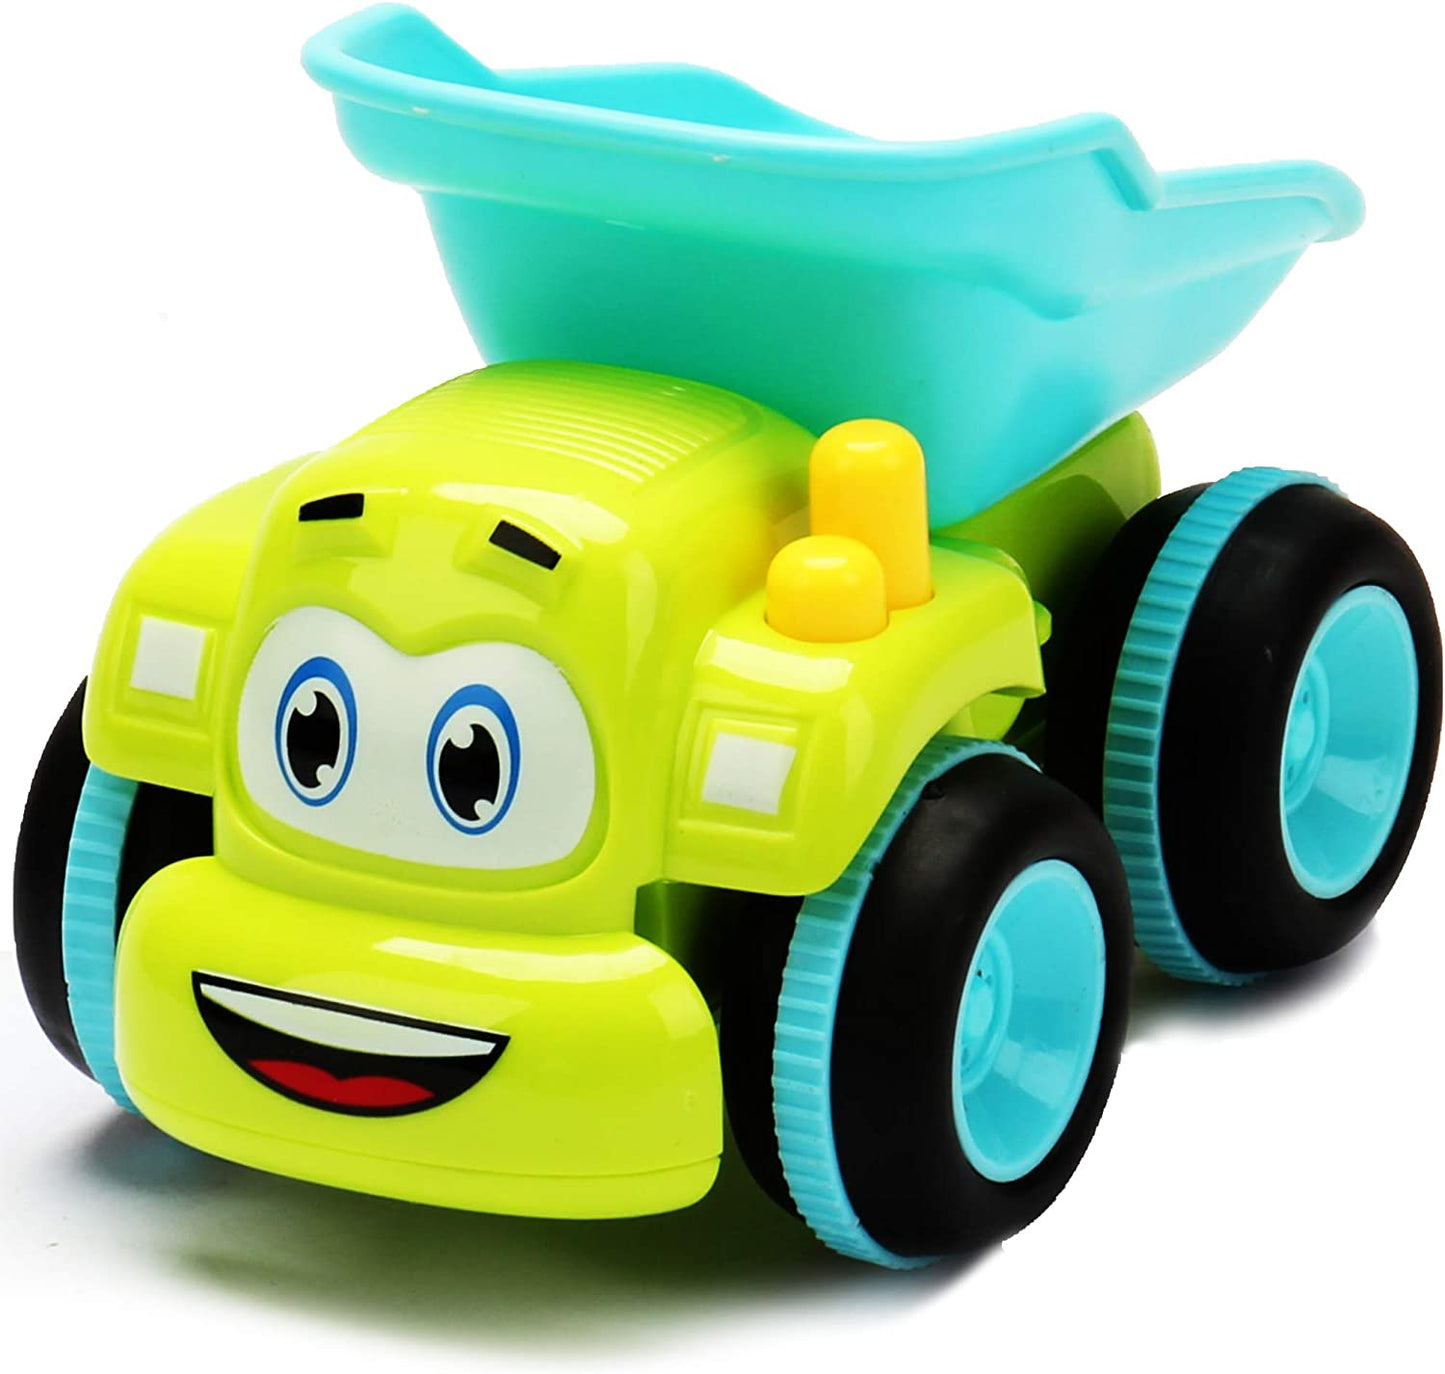 4 Friction Powered Trucks Set | Push and Go Toys for Boys & Girls